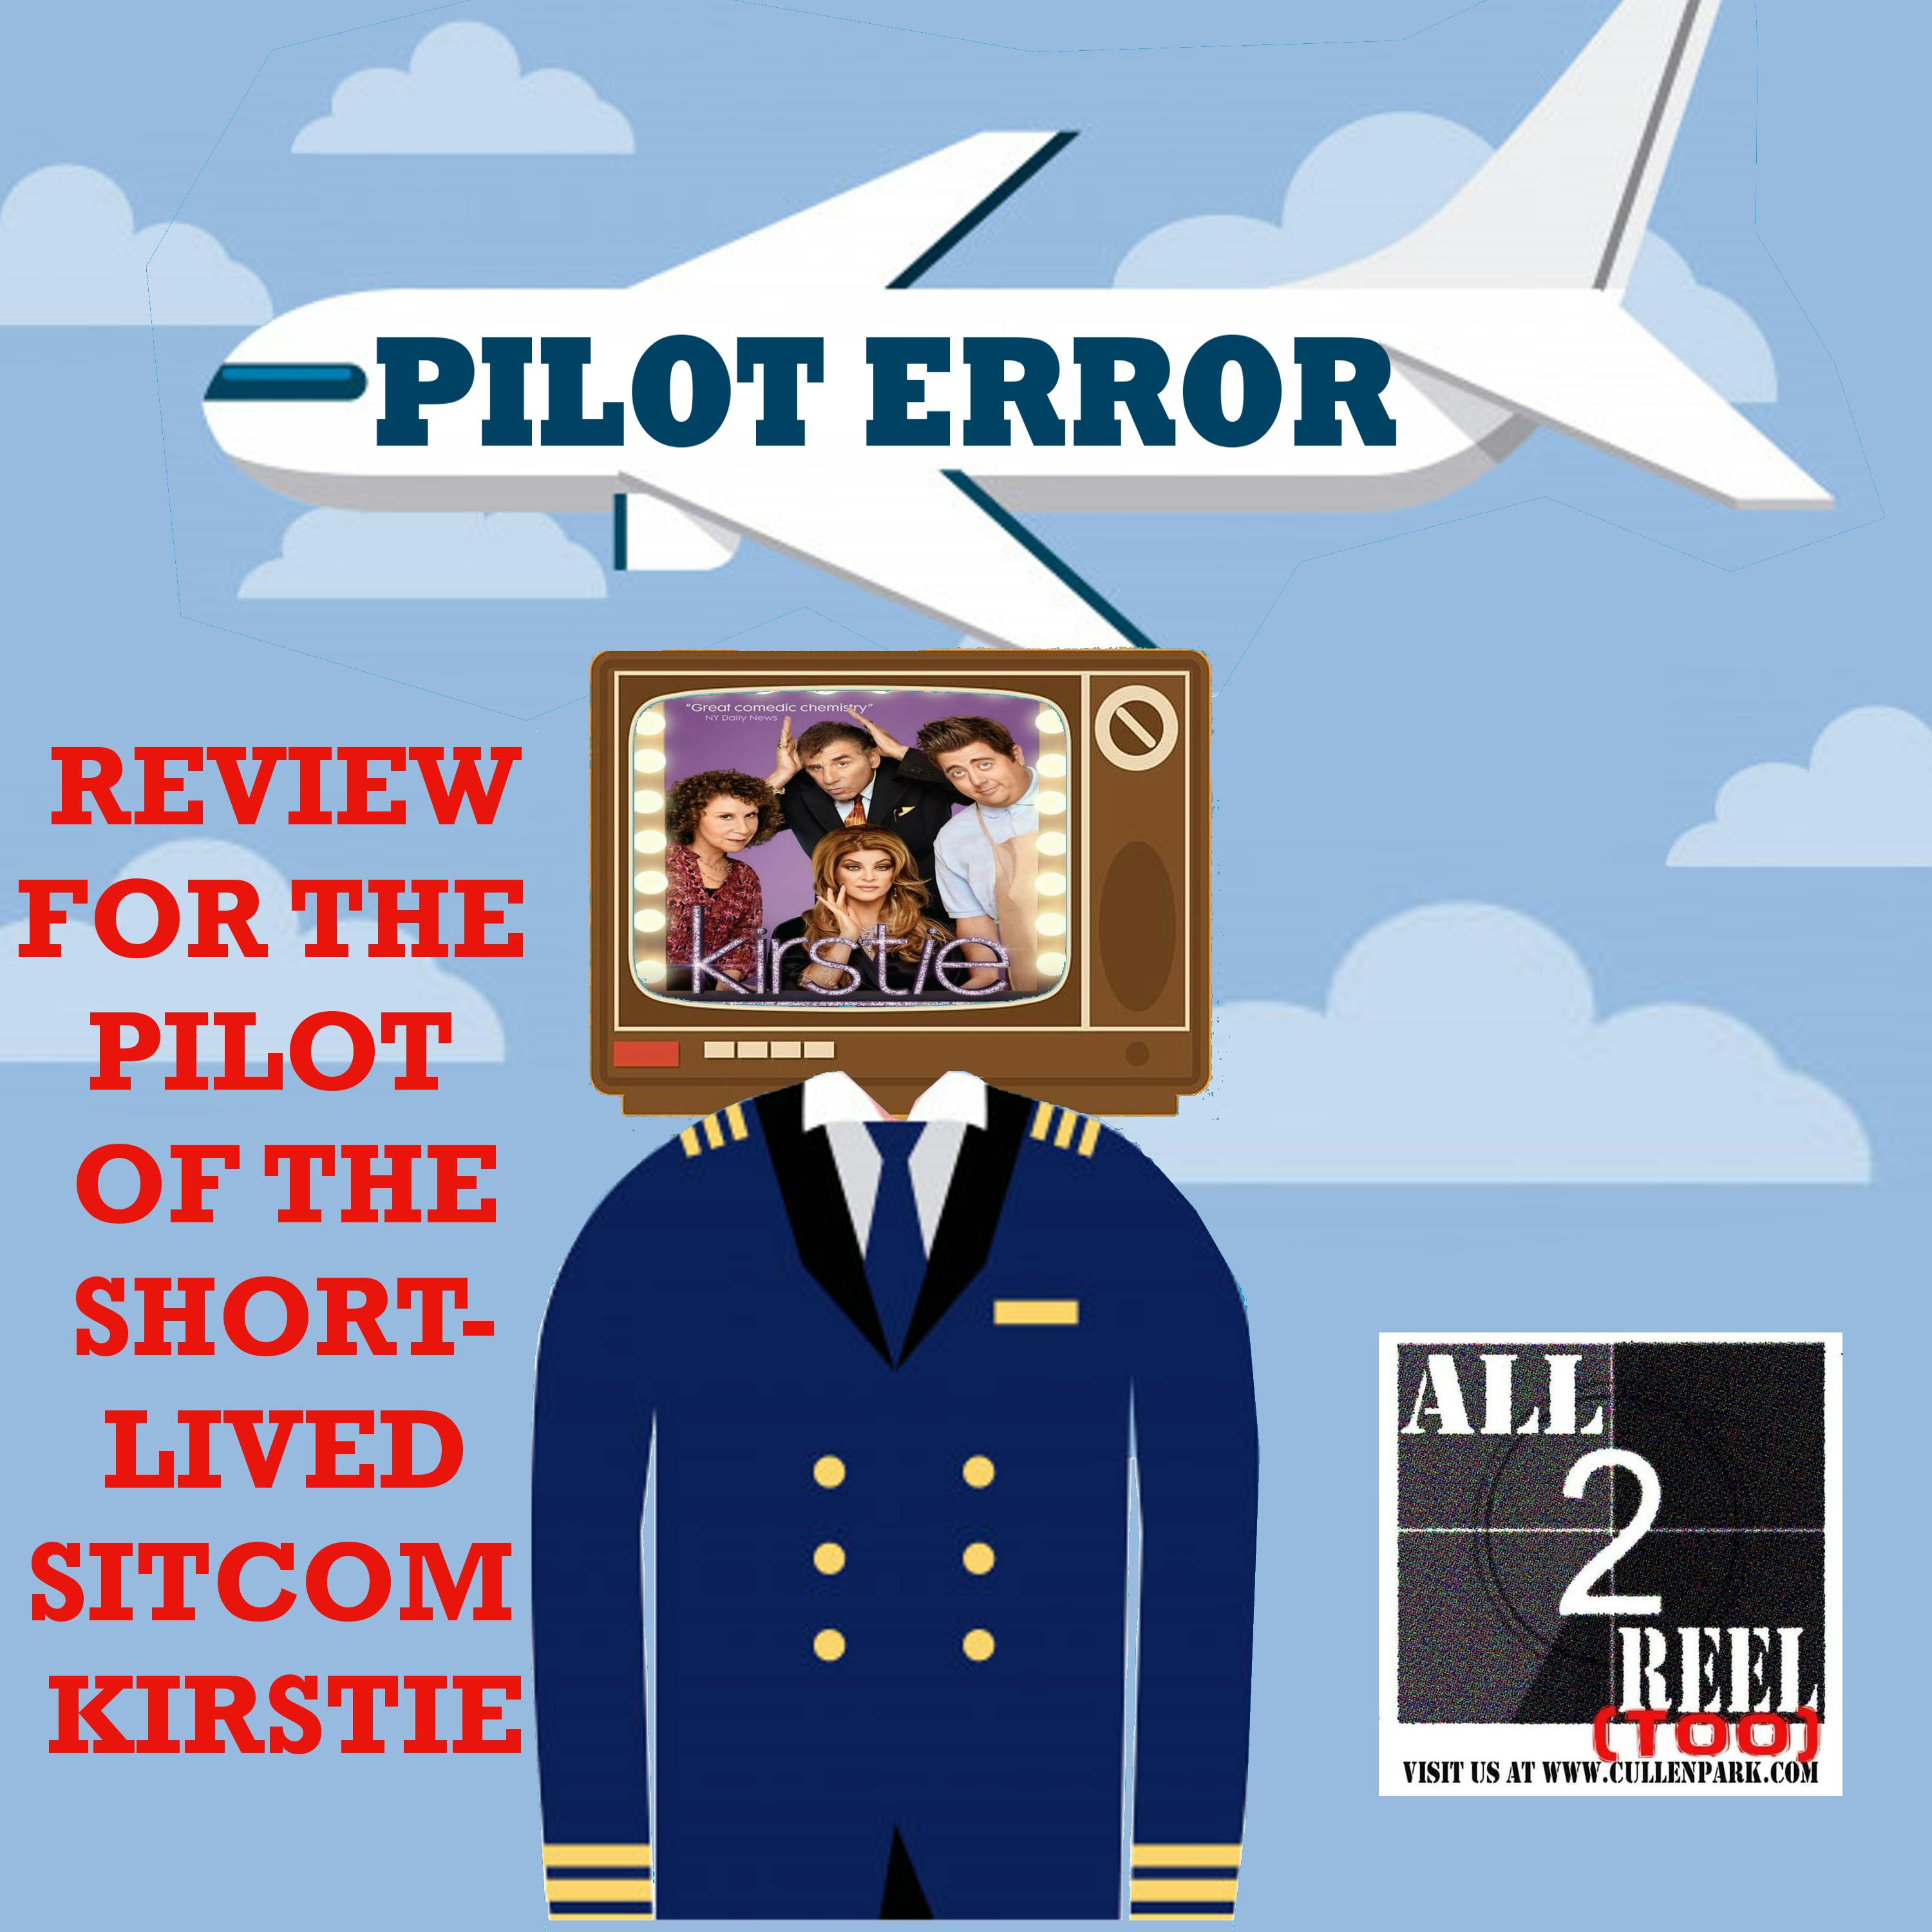 KIRSTIE - PILOT ERROR REVIEW Image